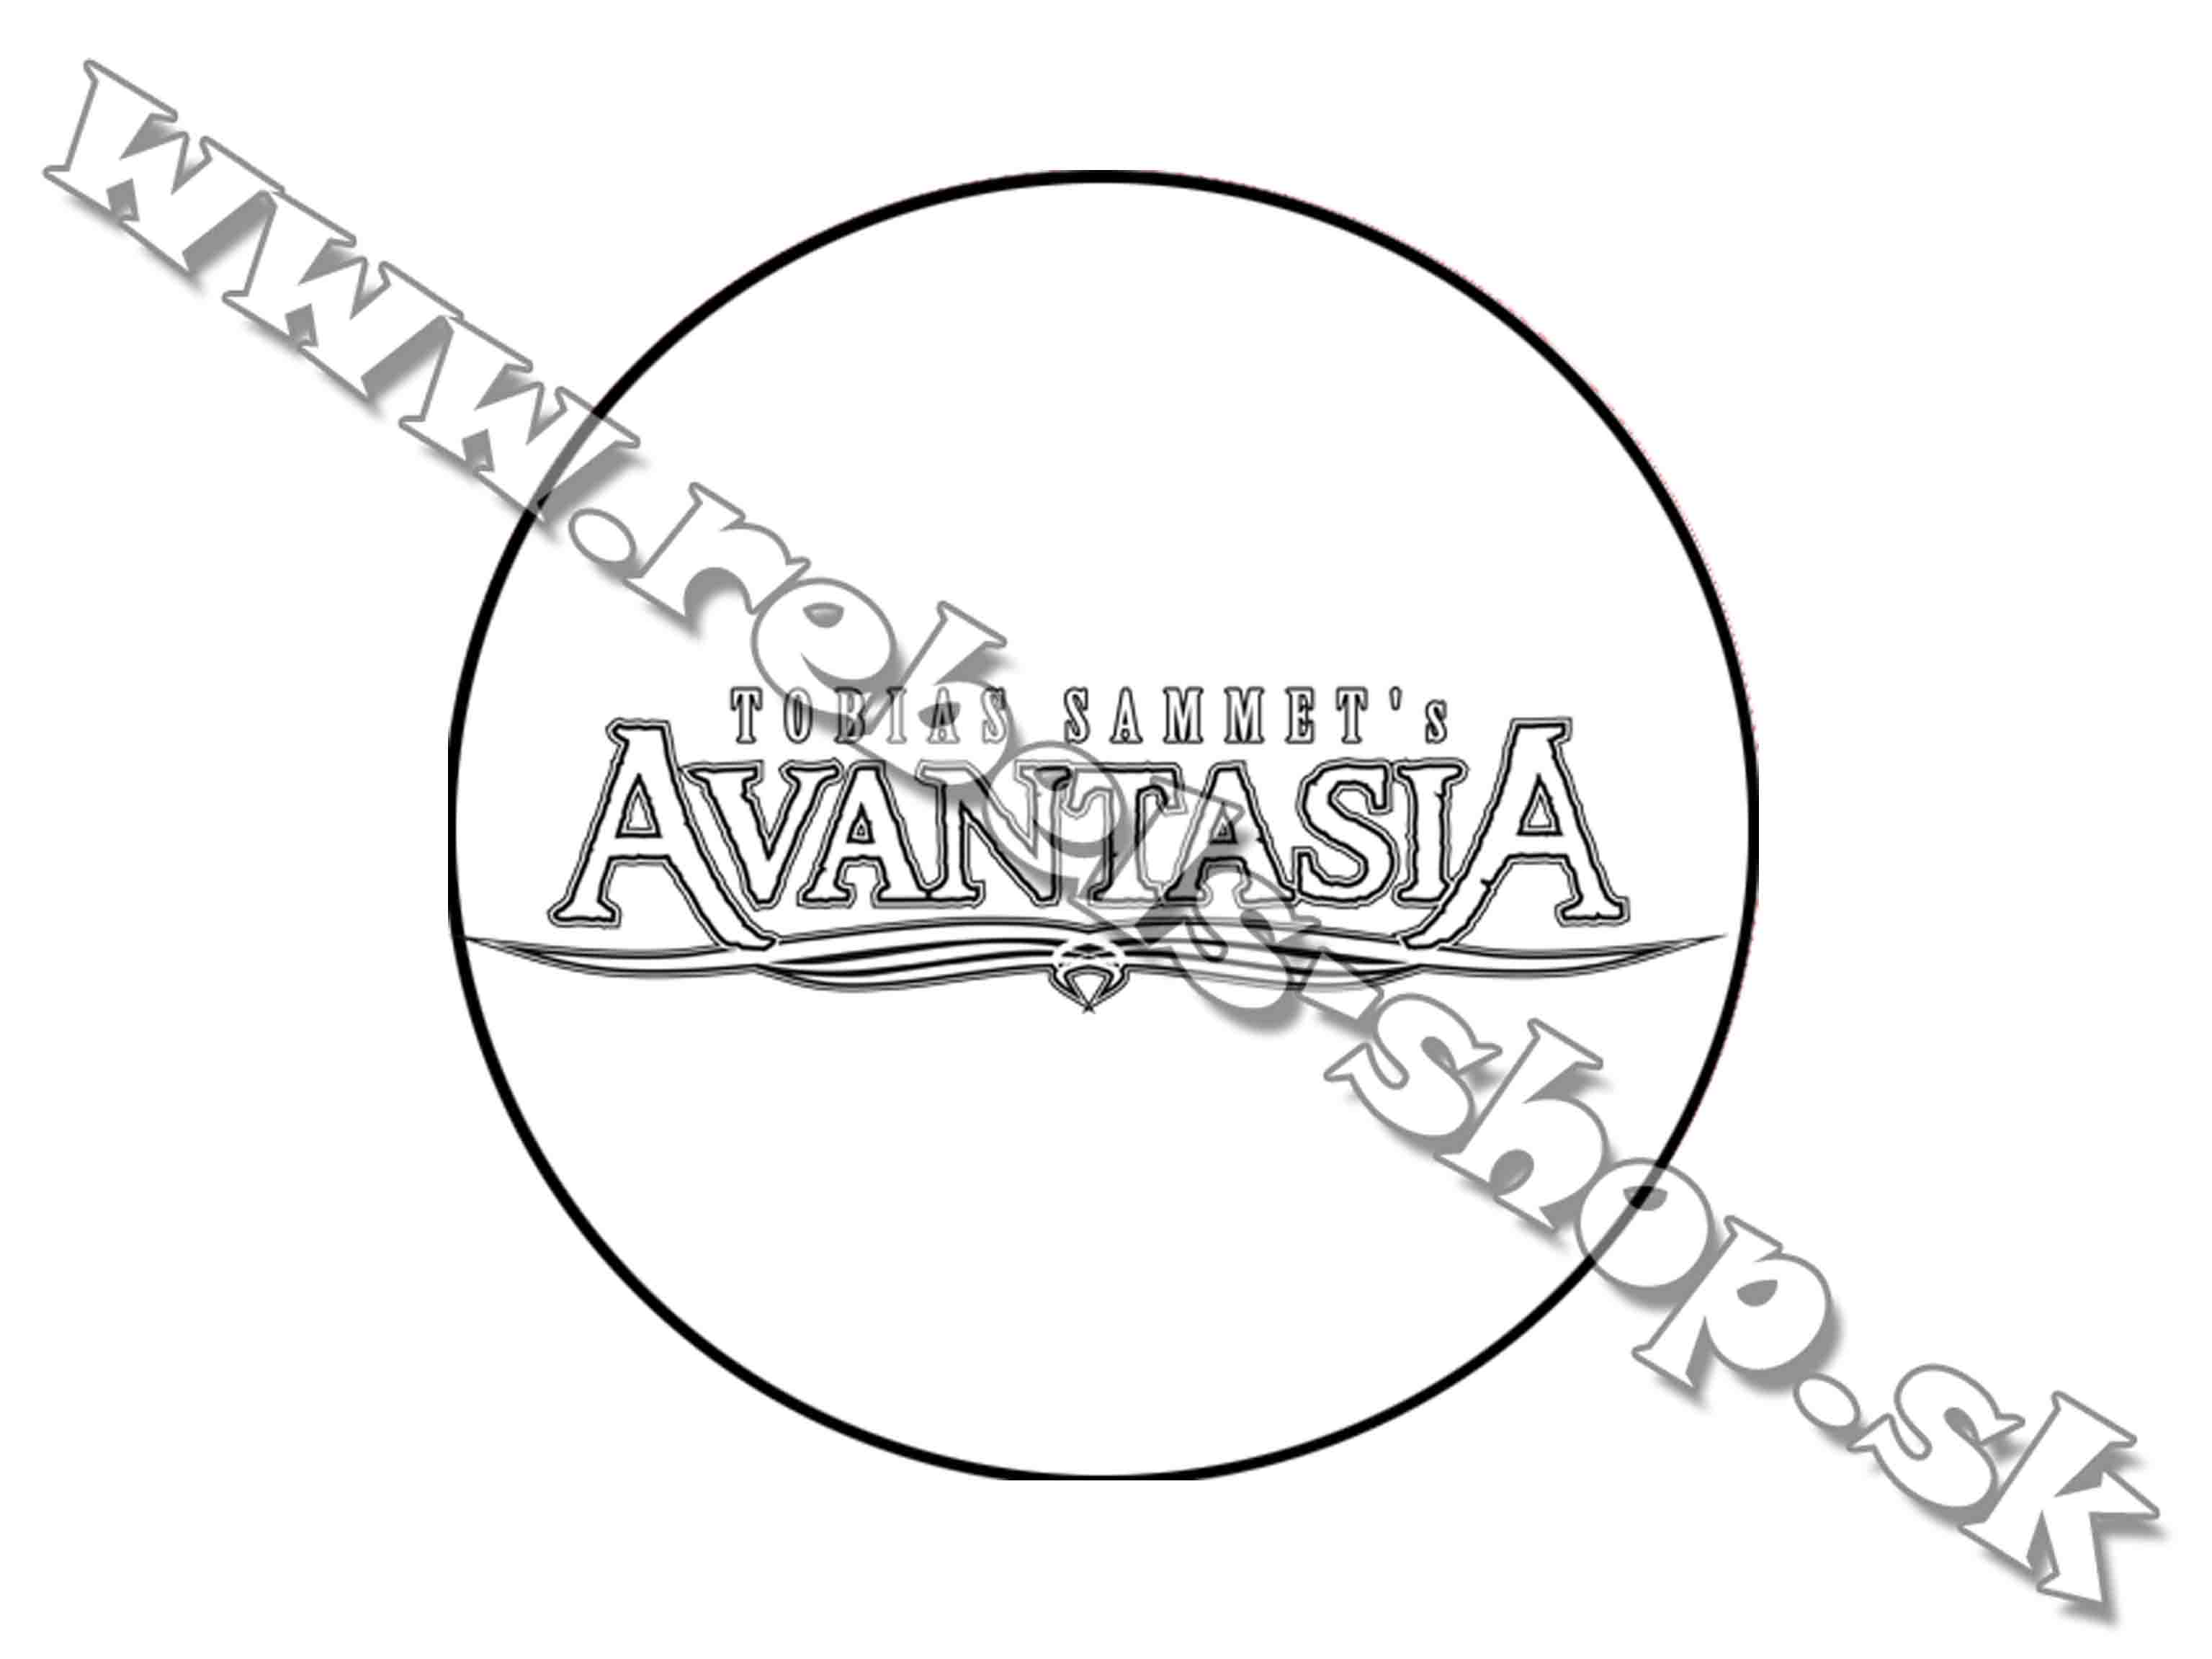 Odznak "Avantasia"